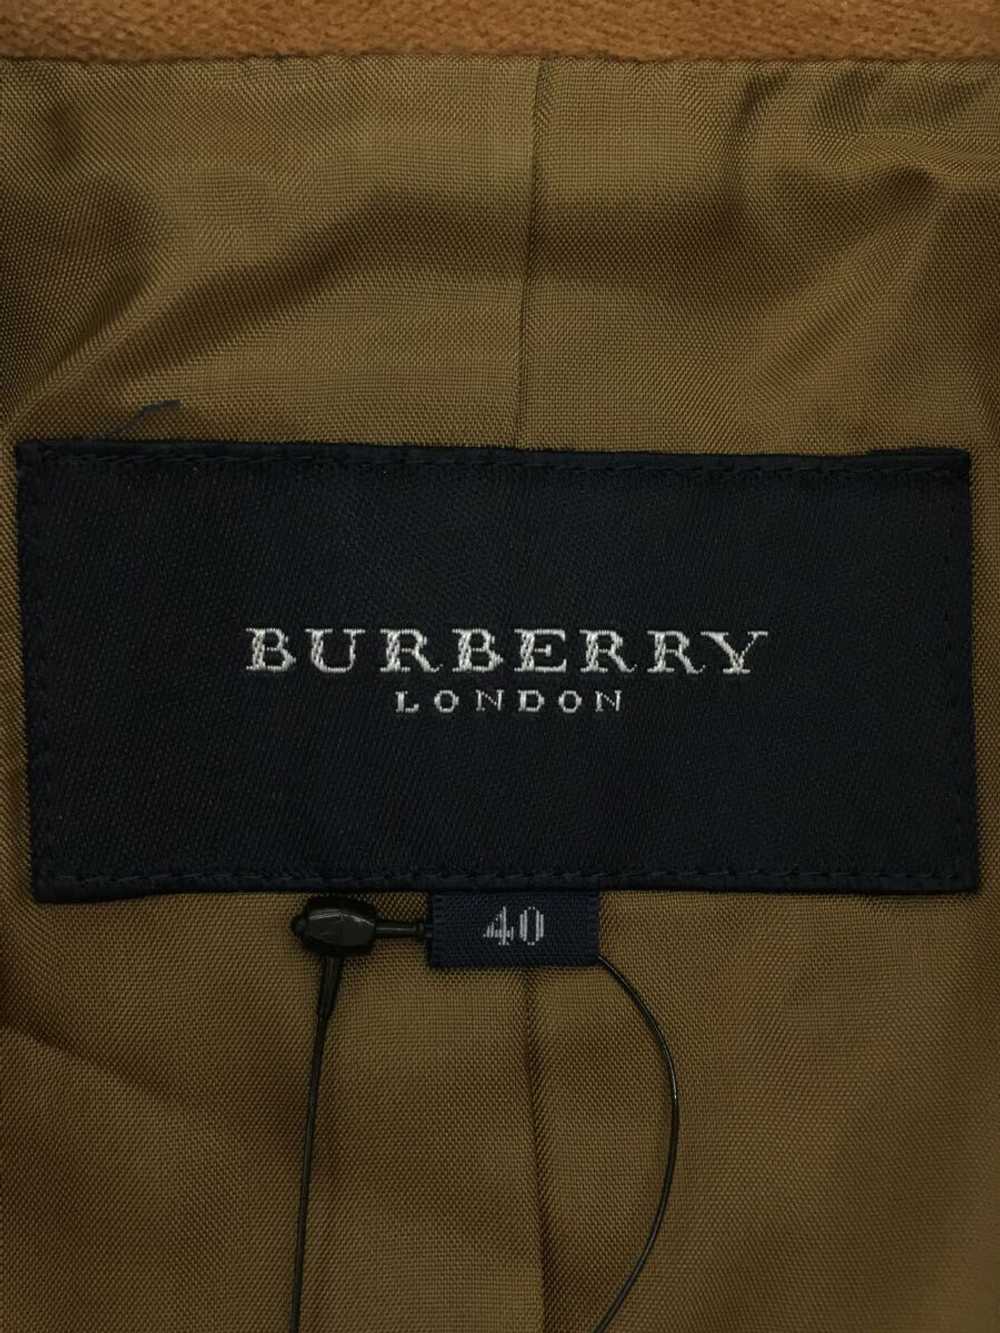 Used Burberry London Nova Check/Cupra/Peacoat/40/… - image 3